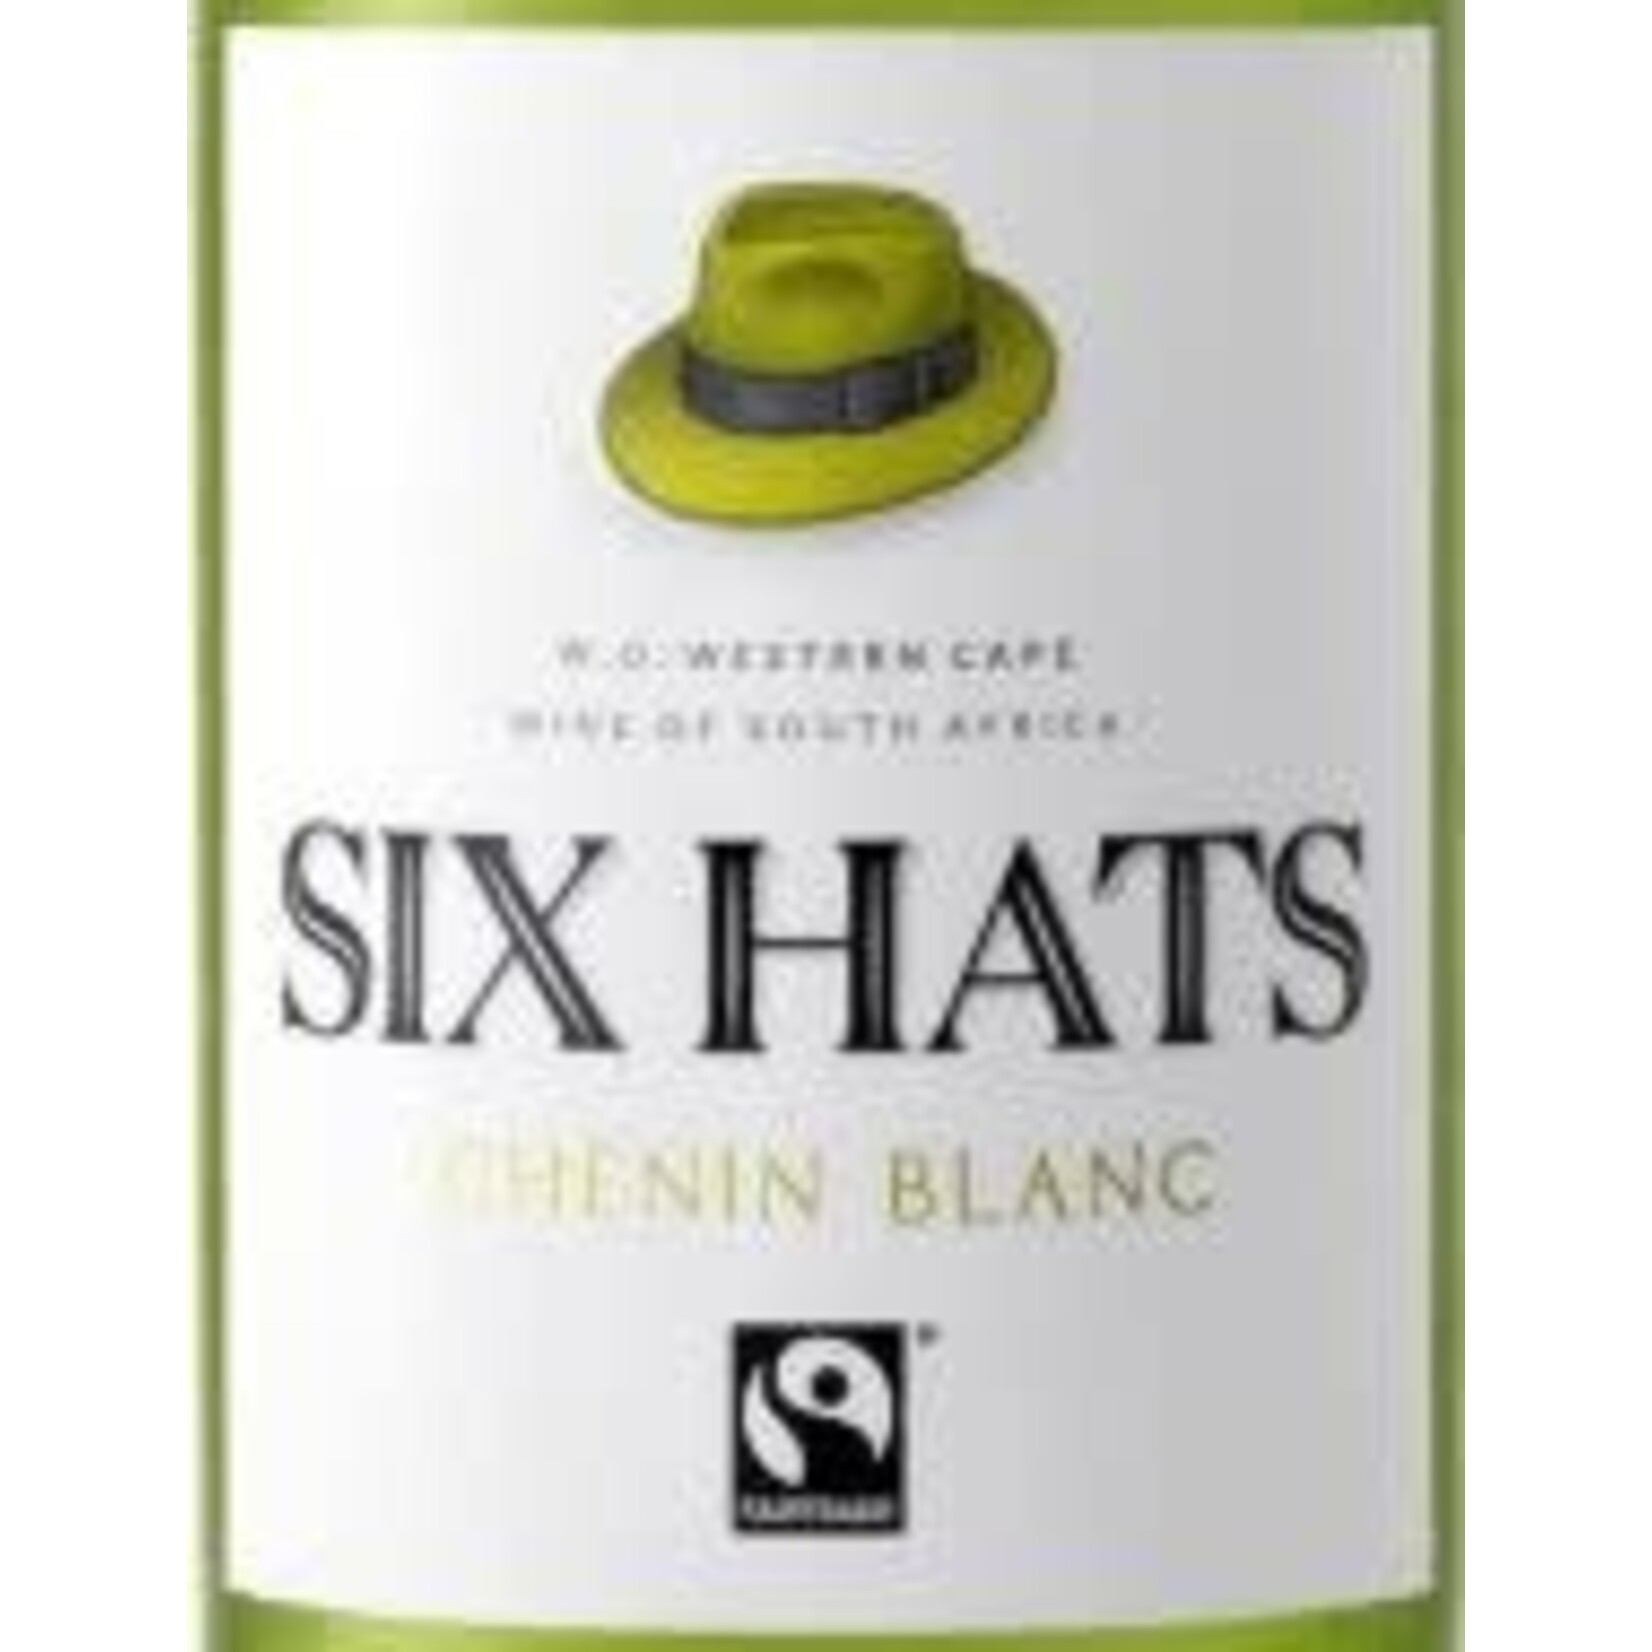 Six Hats Six Hats Chenin Blanc 2021,  Western Cape South Africa